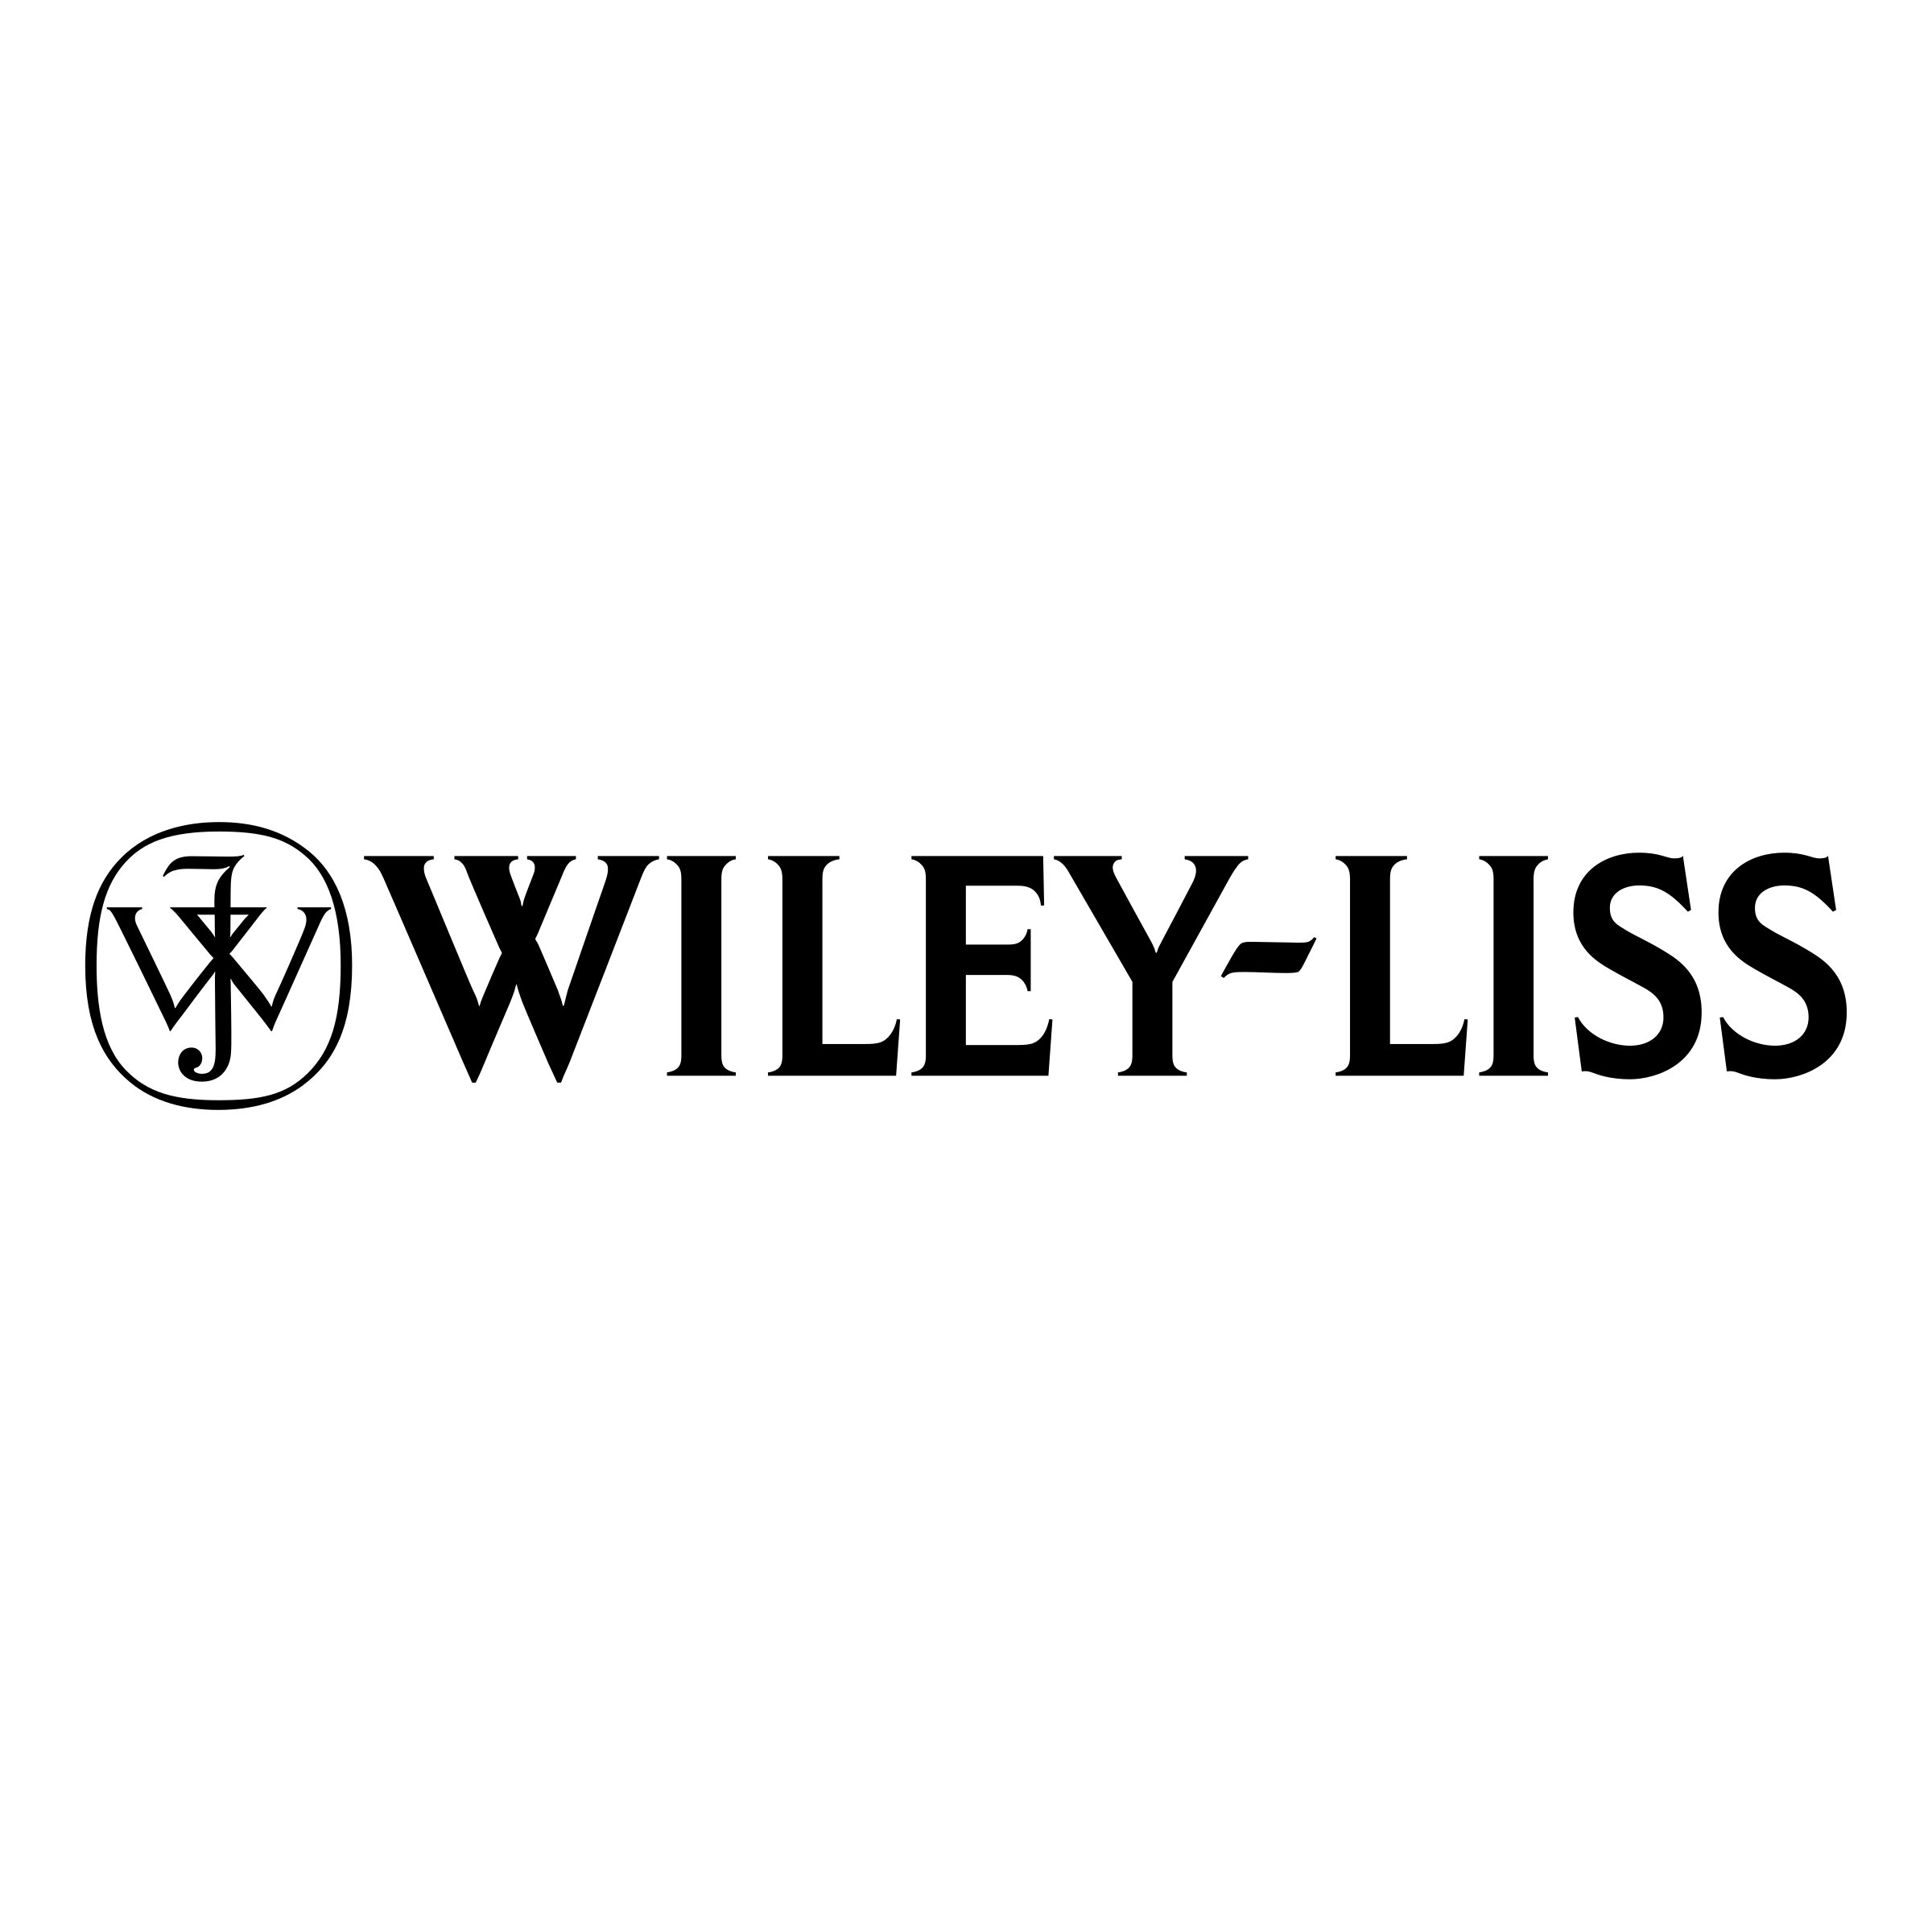 WSDOT Logo - Wiley Liss Logo PNG Transparent & SVG Vector - Freebie Supply